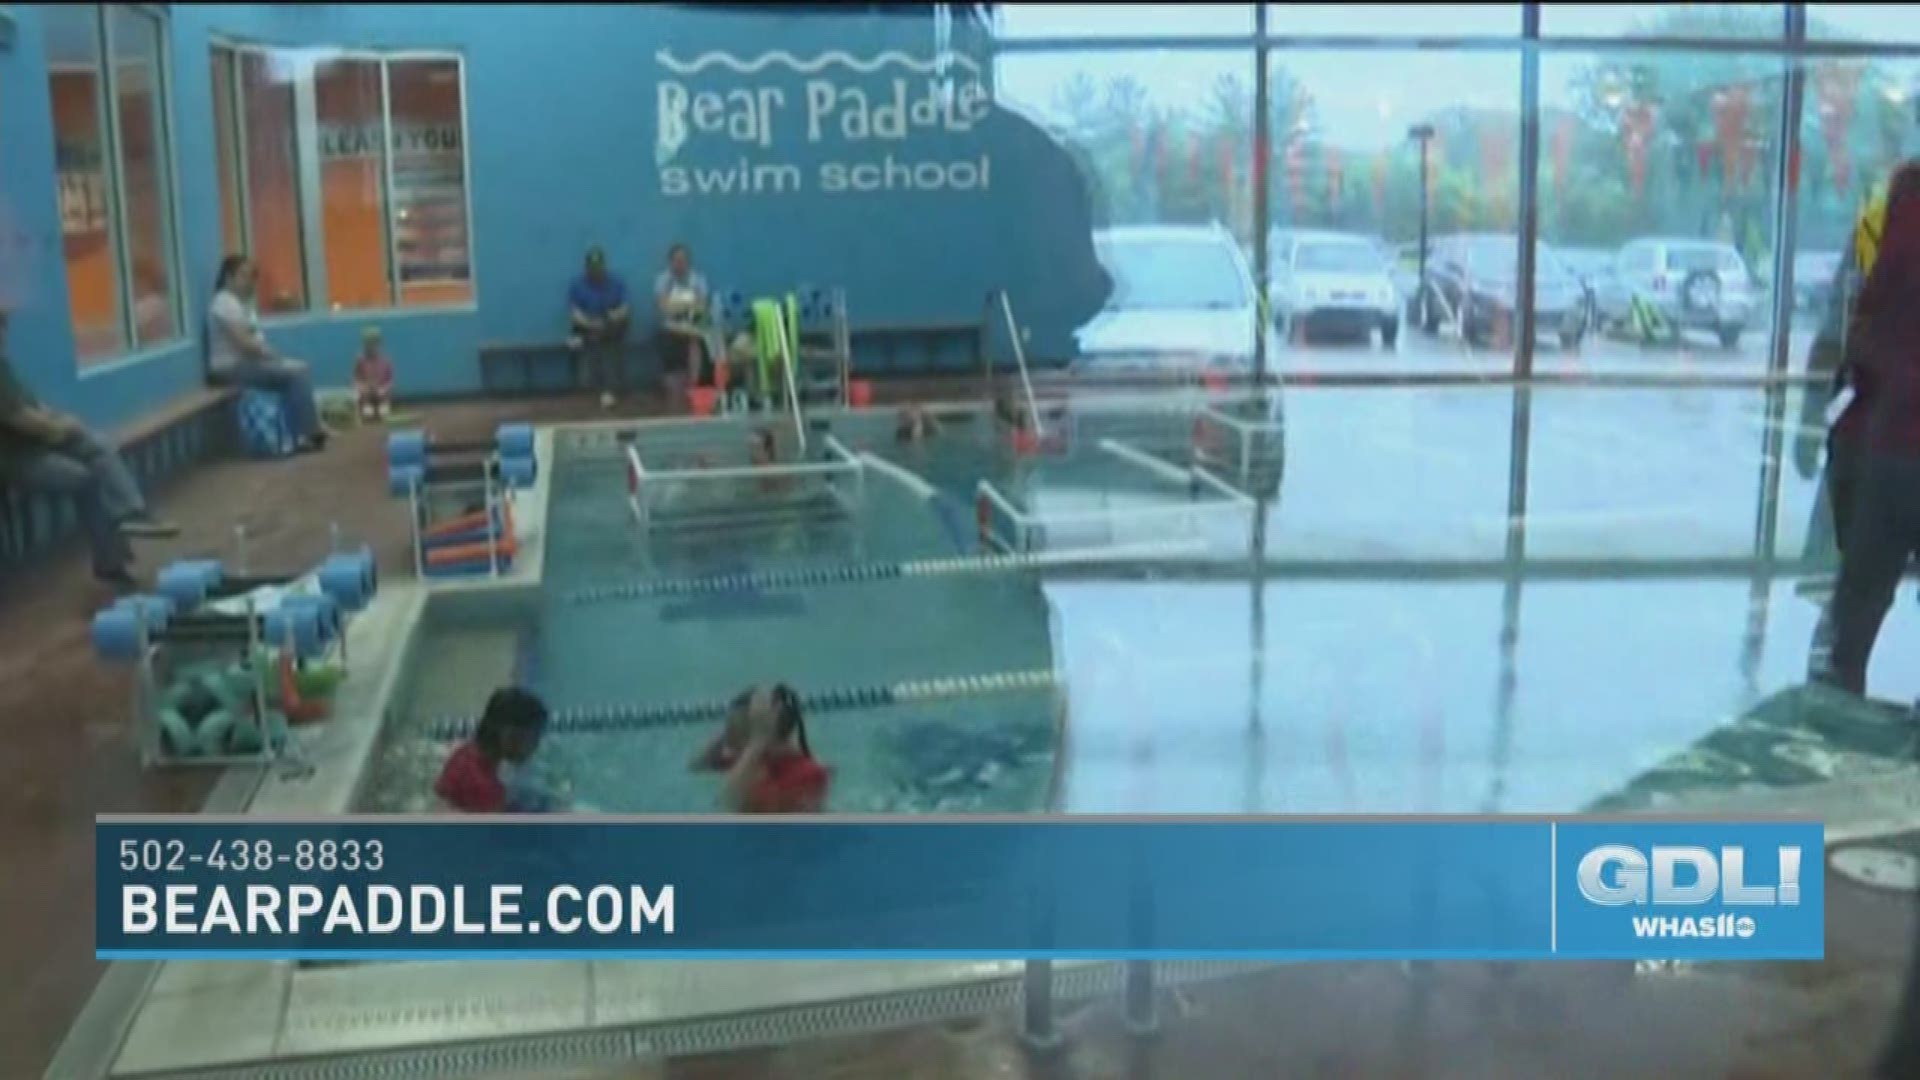 Little ones make a big splash at Bear Paddle Swim School | 0